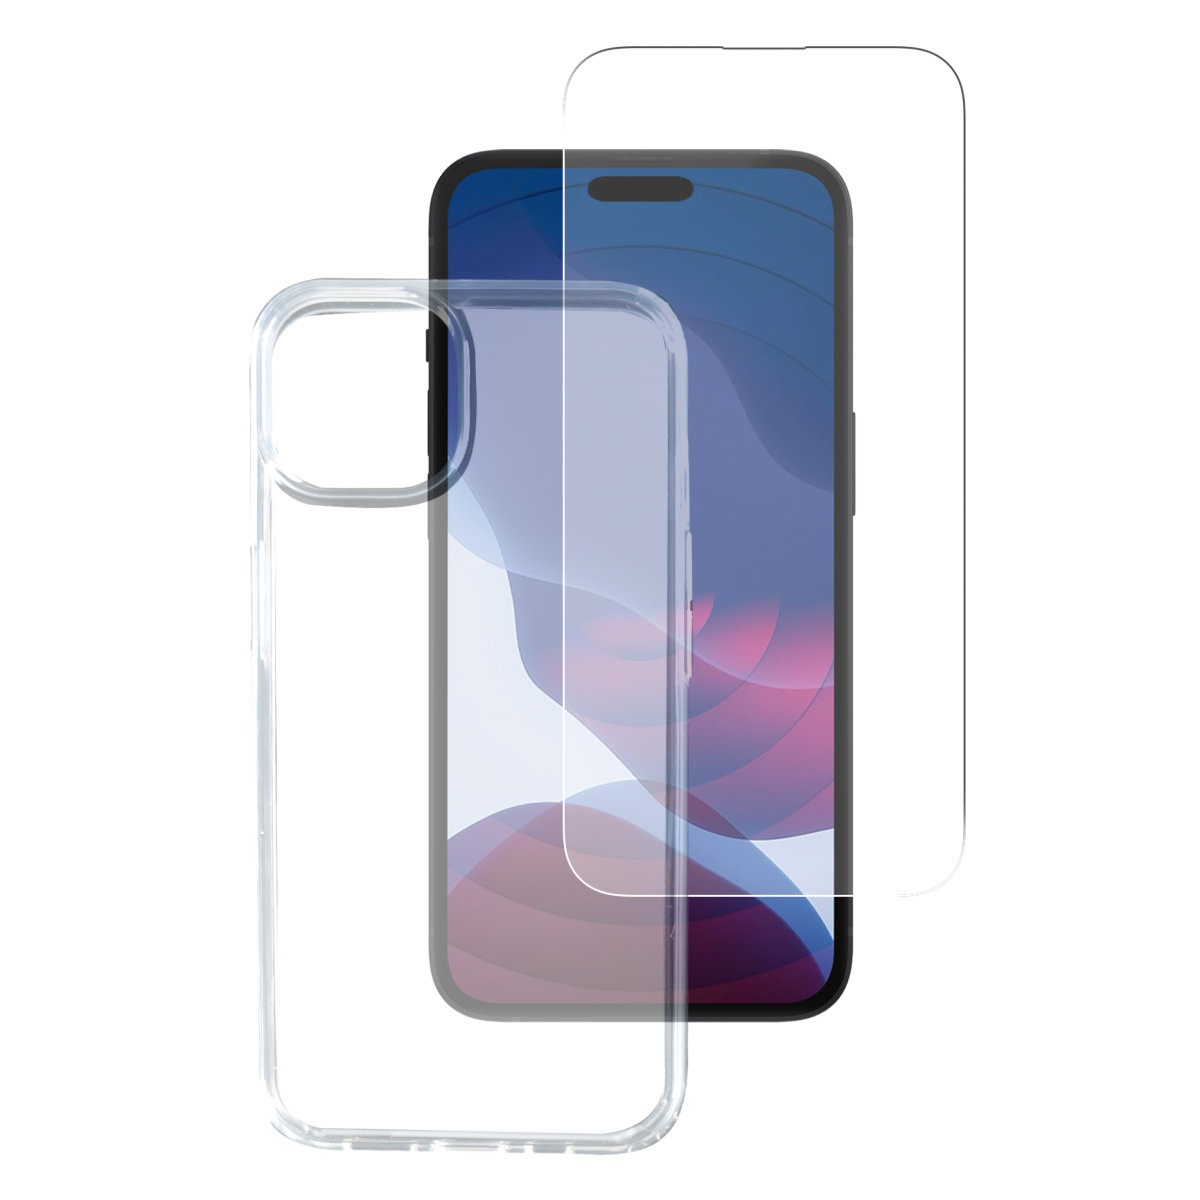 14 Starter iPhone Backcover, Glas, Clear Pro, Set 360° 4SMARTS Transparent X-Pro APPLE,